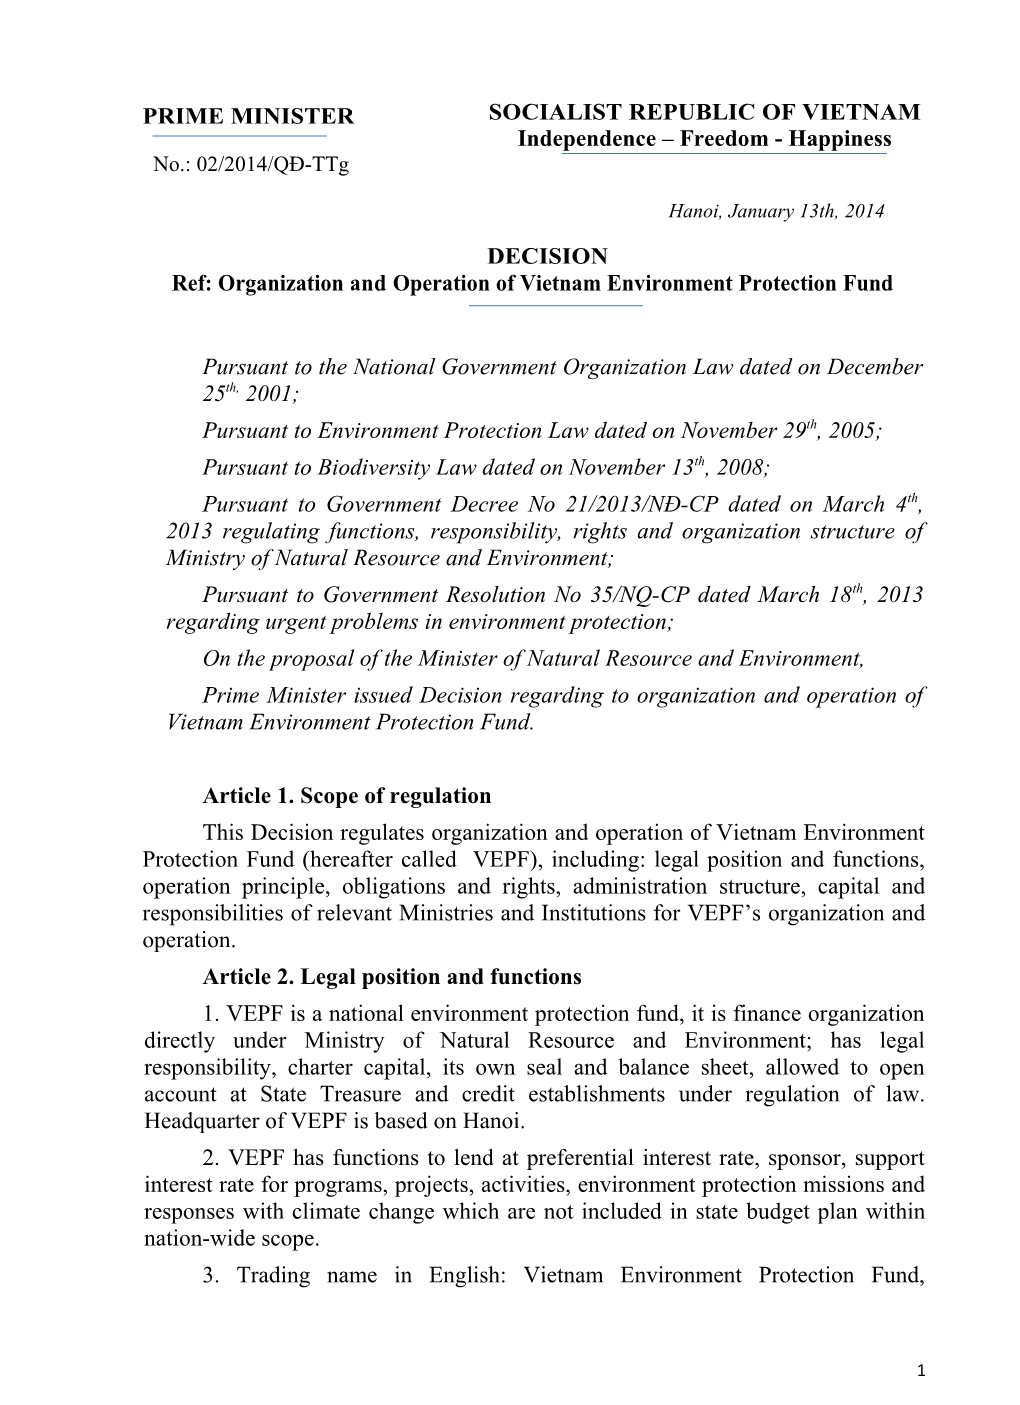 Ref:Organization Andoperationof Vietnam Environment Protection Fund